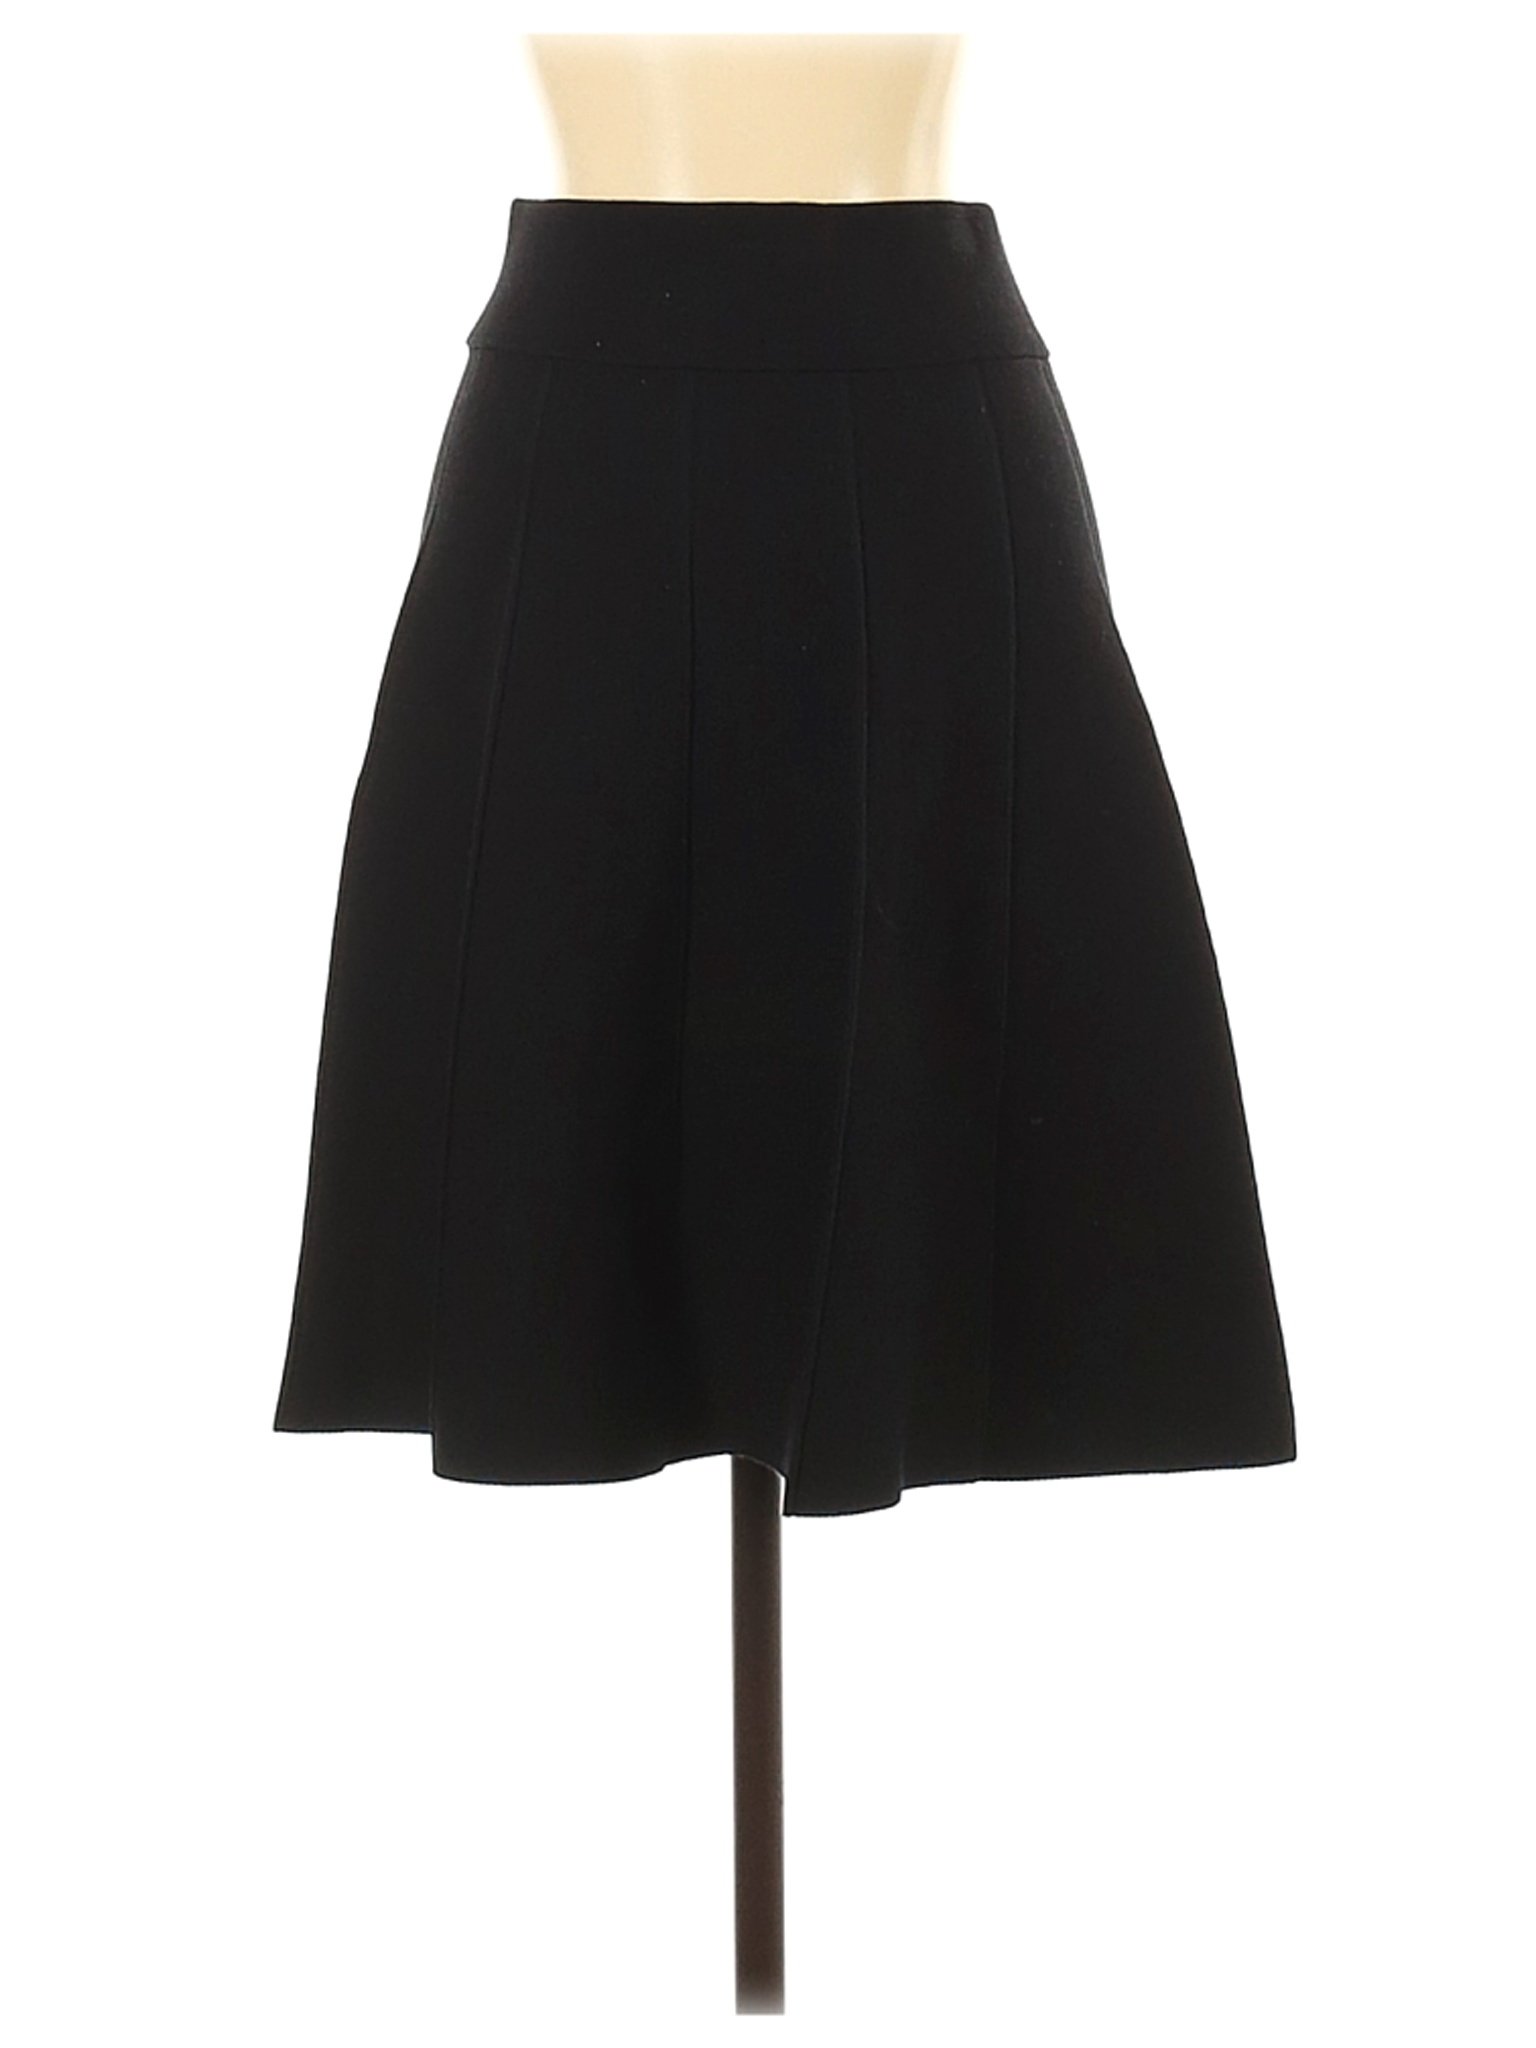 NWT Ann Taylor Women Black Casual Skirt XS | eBay